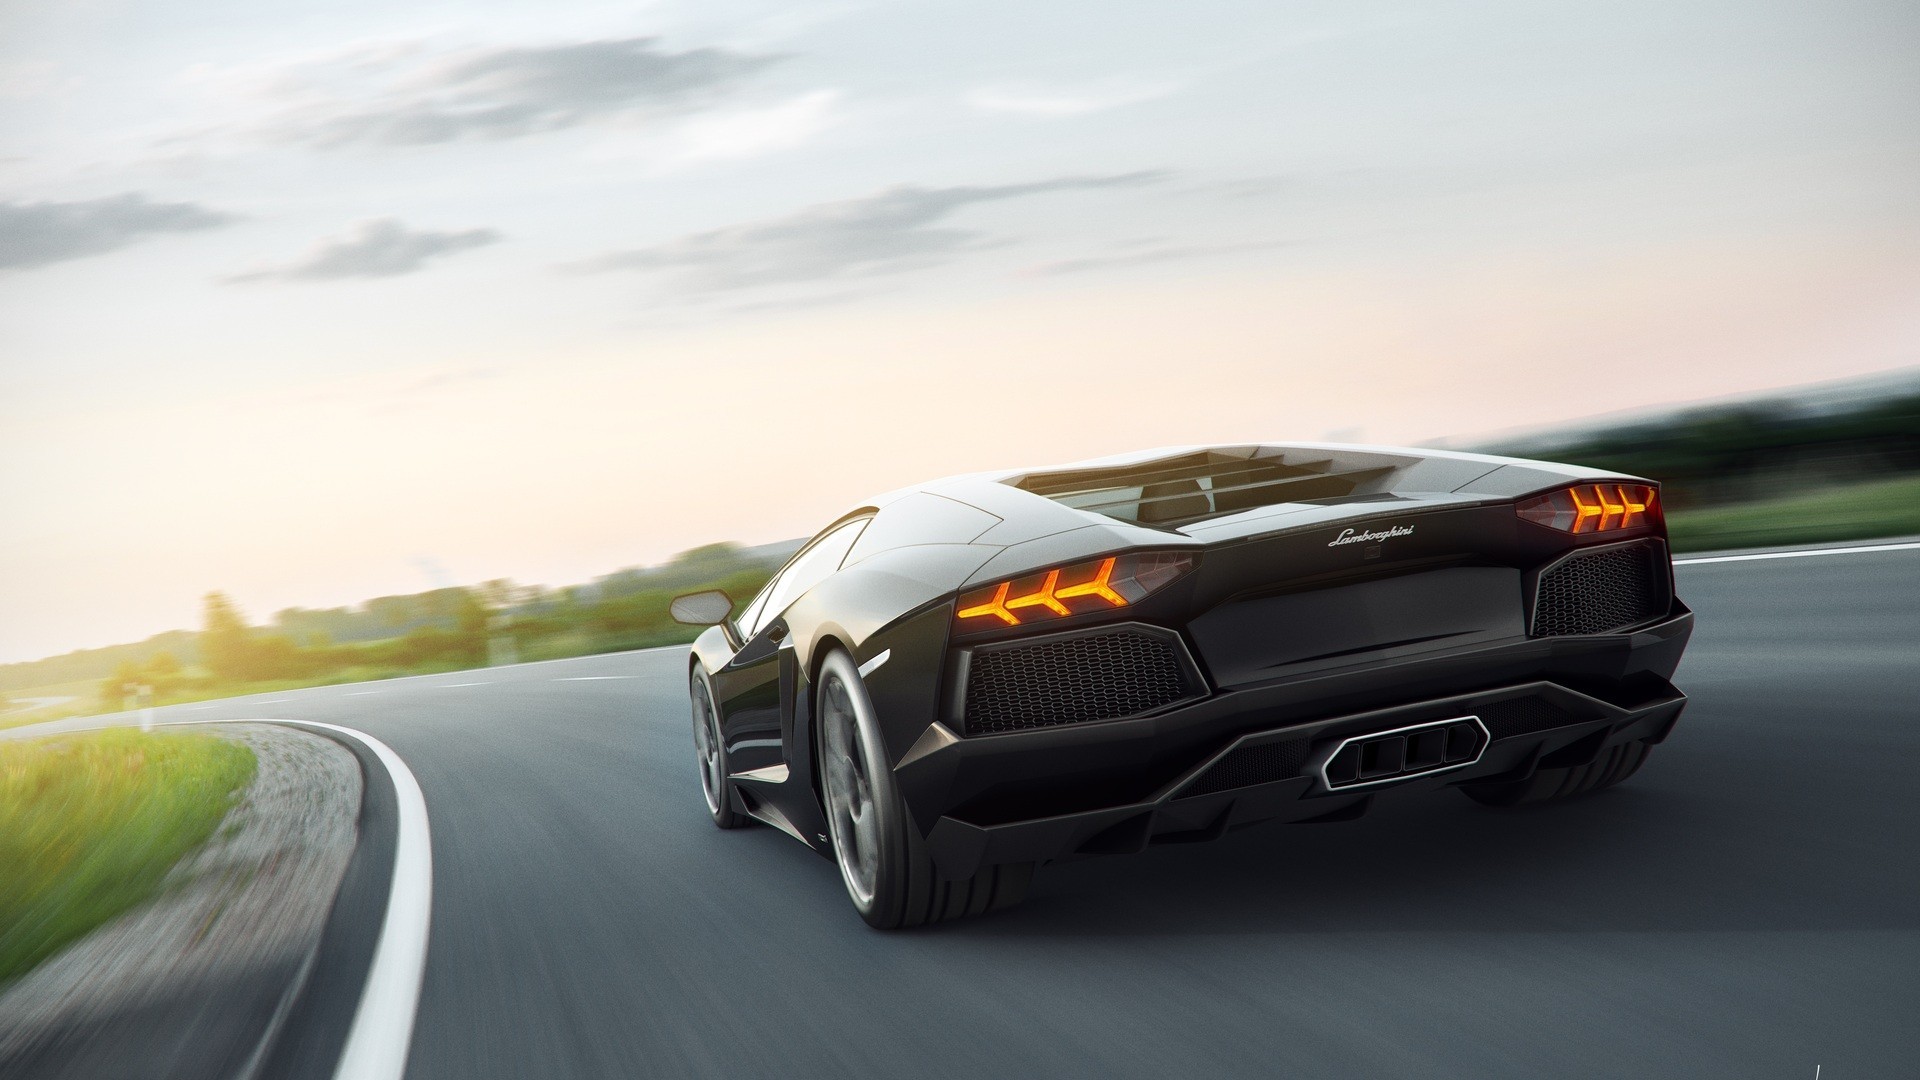 Lamborghini Aventador, Road, Motion Blur, Car Wallpaper